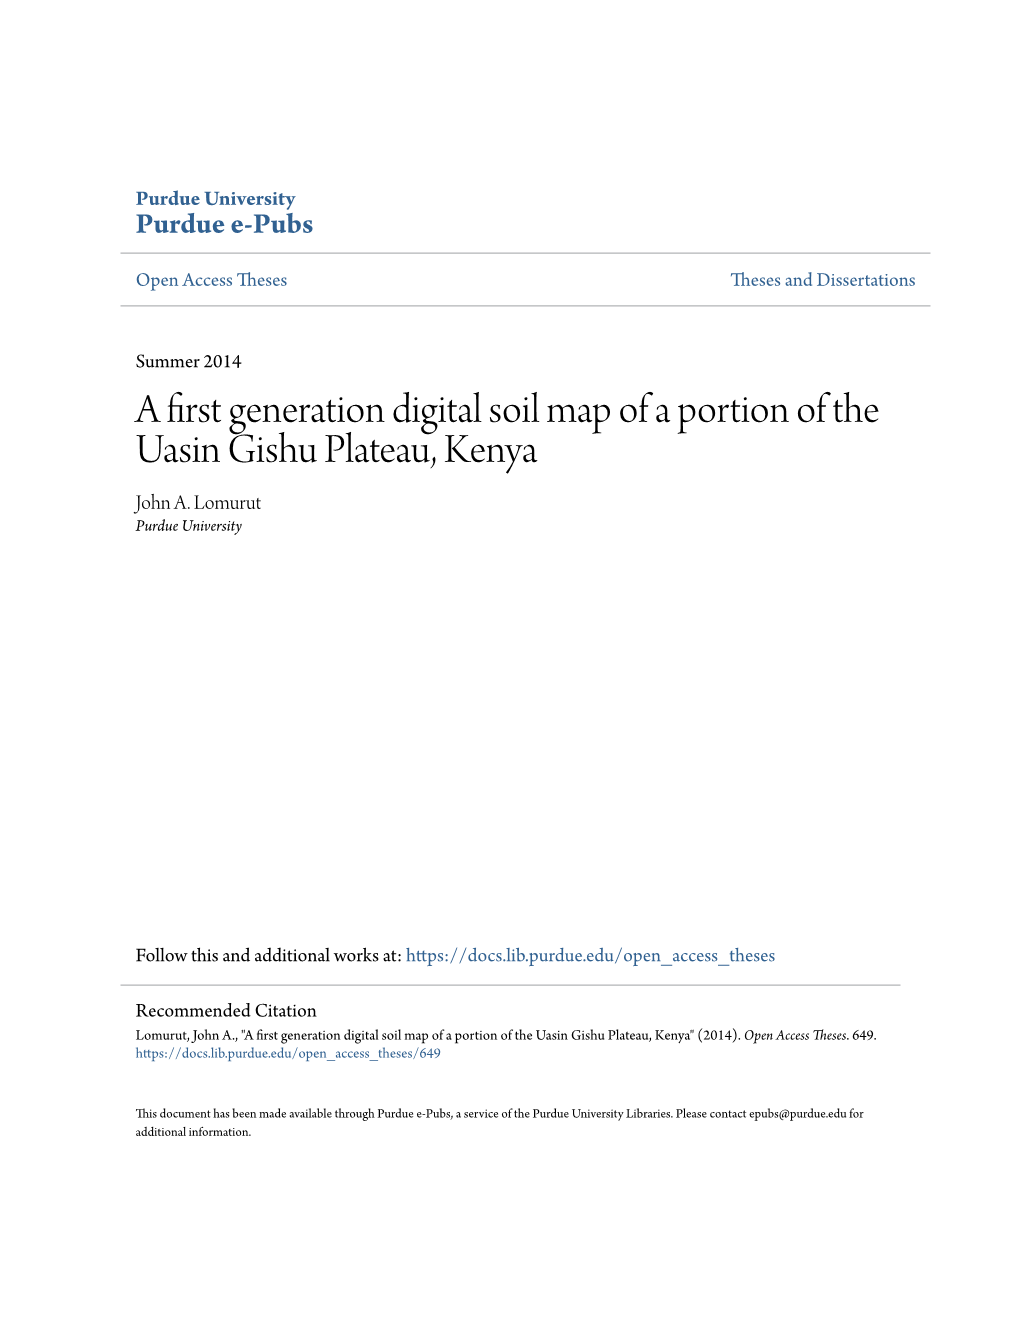 A First Generation Digital Soil Map of a Portion of the Uasin Gishu Plateau, Kenya John A